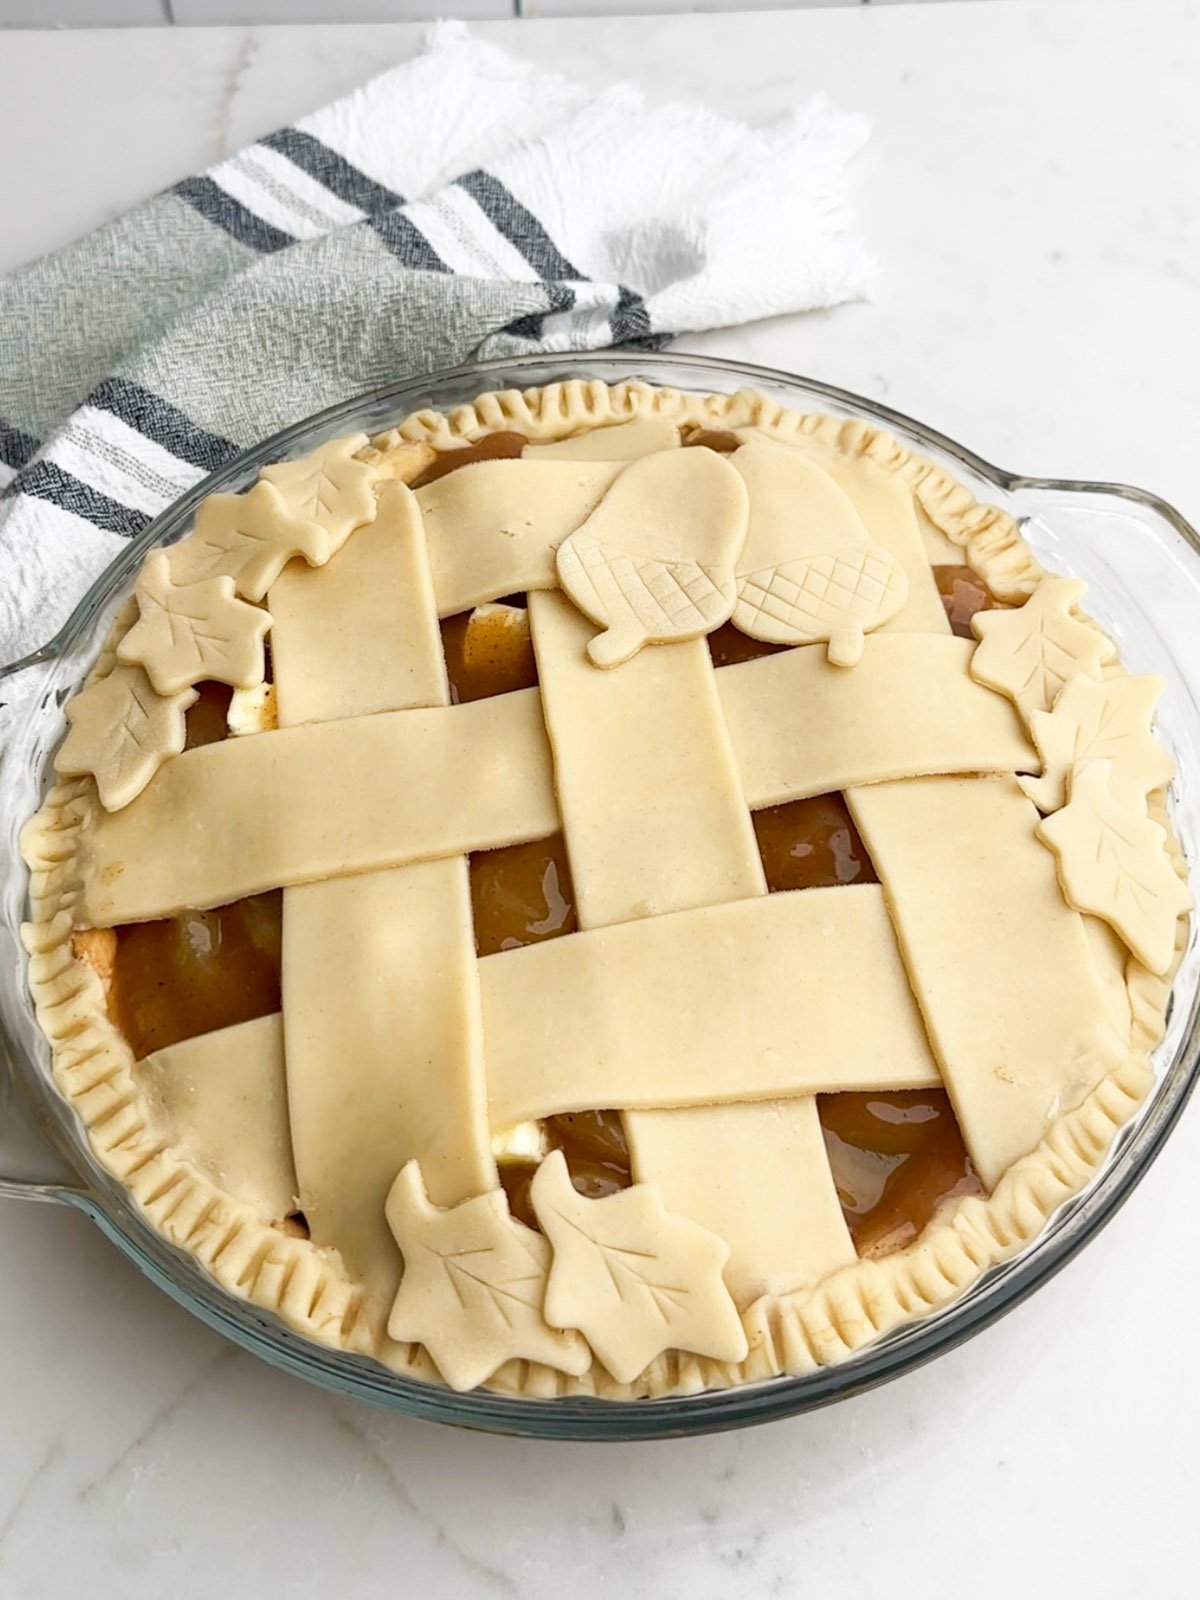 Lattice topped apple pie with pie dough cutouts.